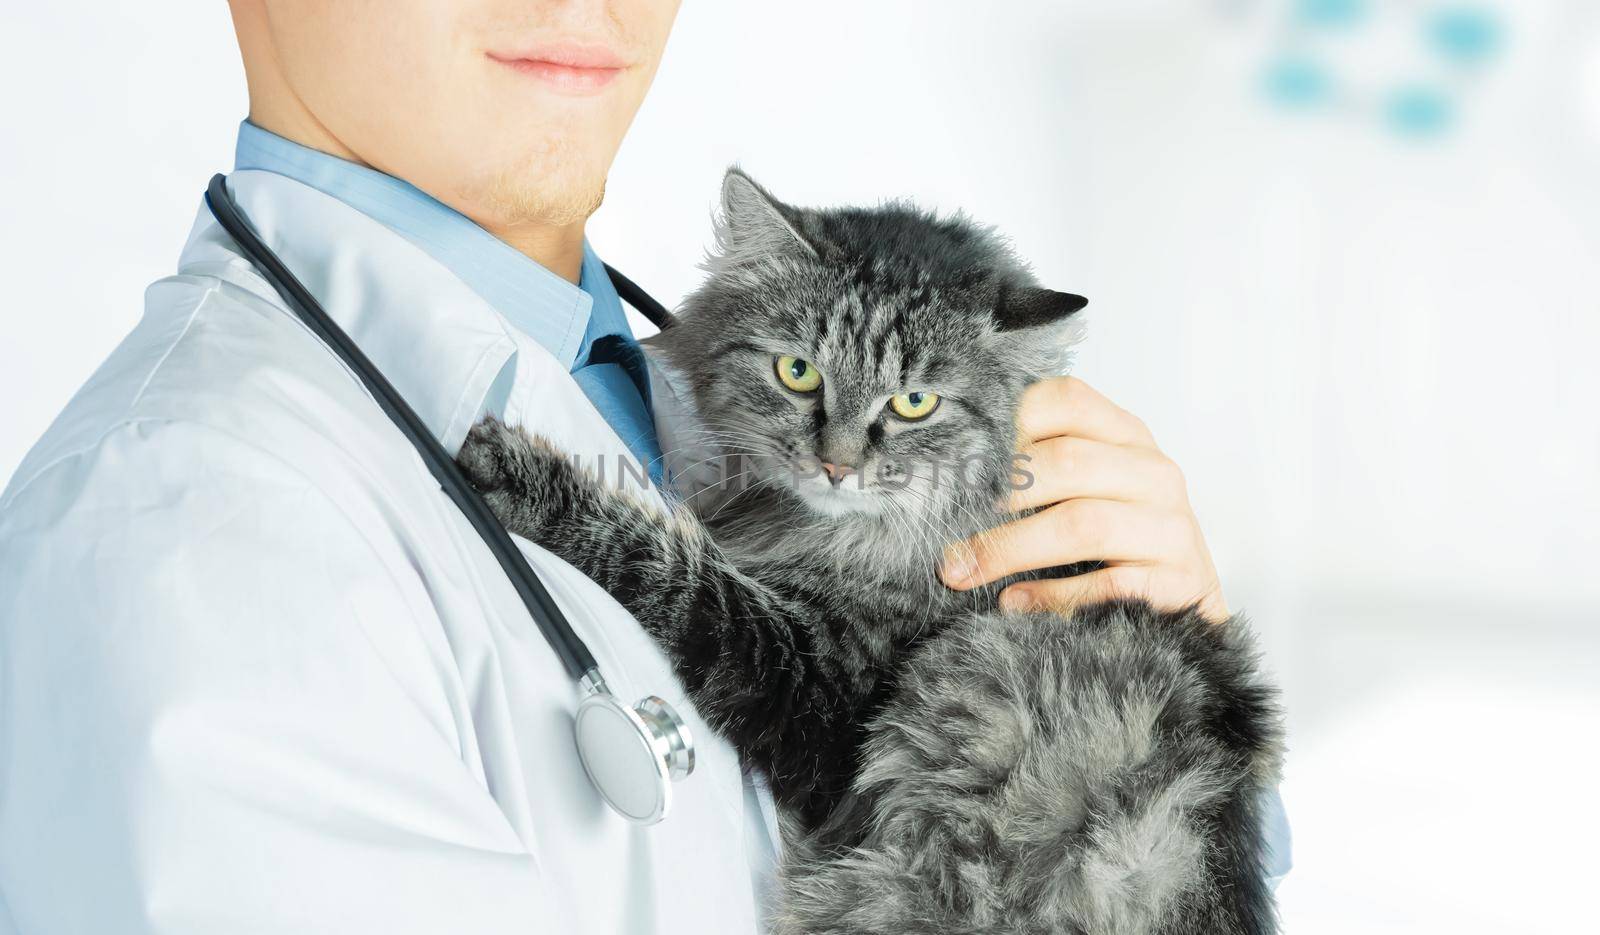 Man doctor veterinarian holds fluffy cat in hospital